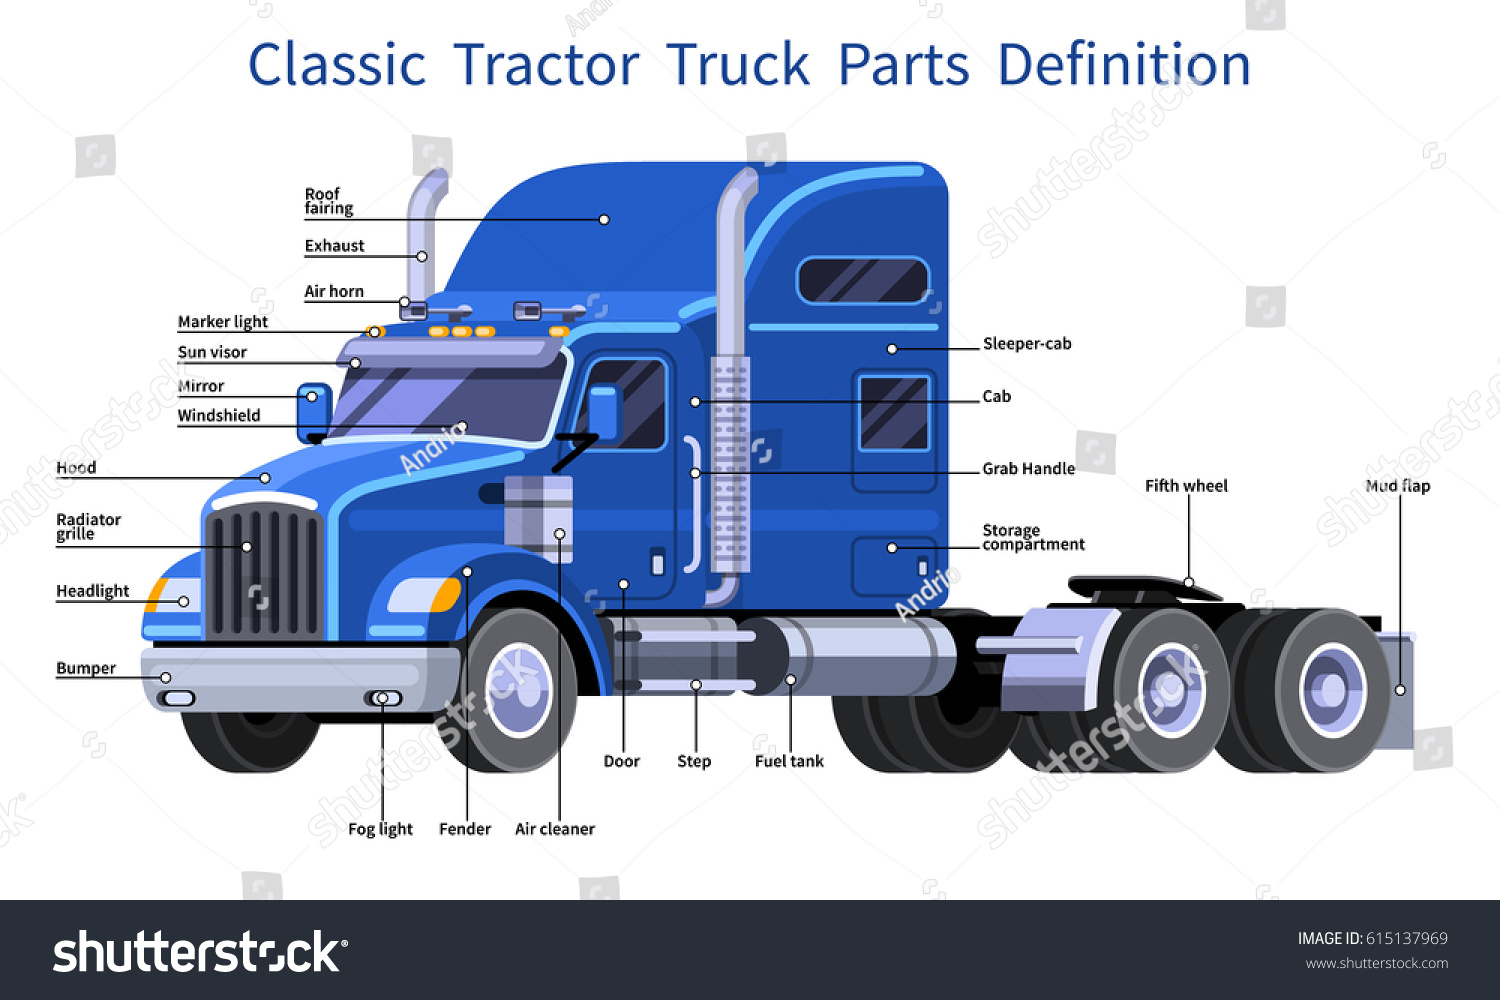 Classic Tractor Truck Parts Definition Truck Stock Vector 615137969  Shutterstock